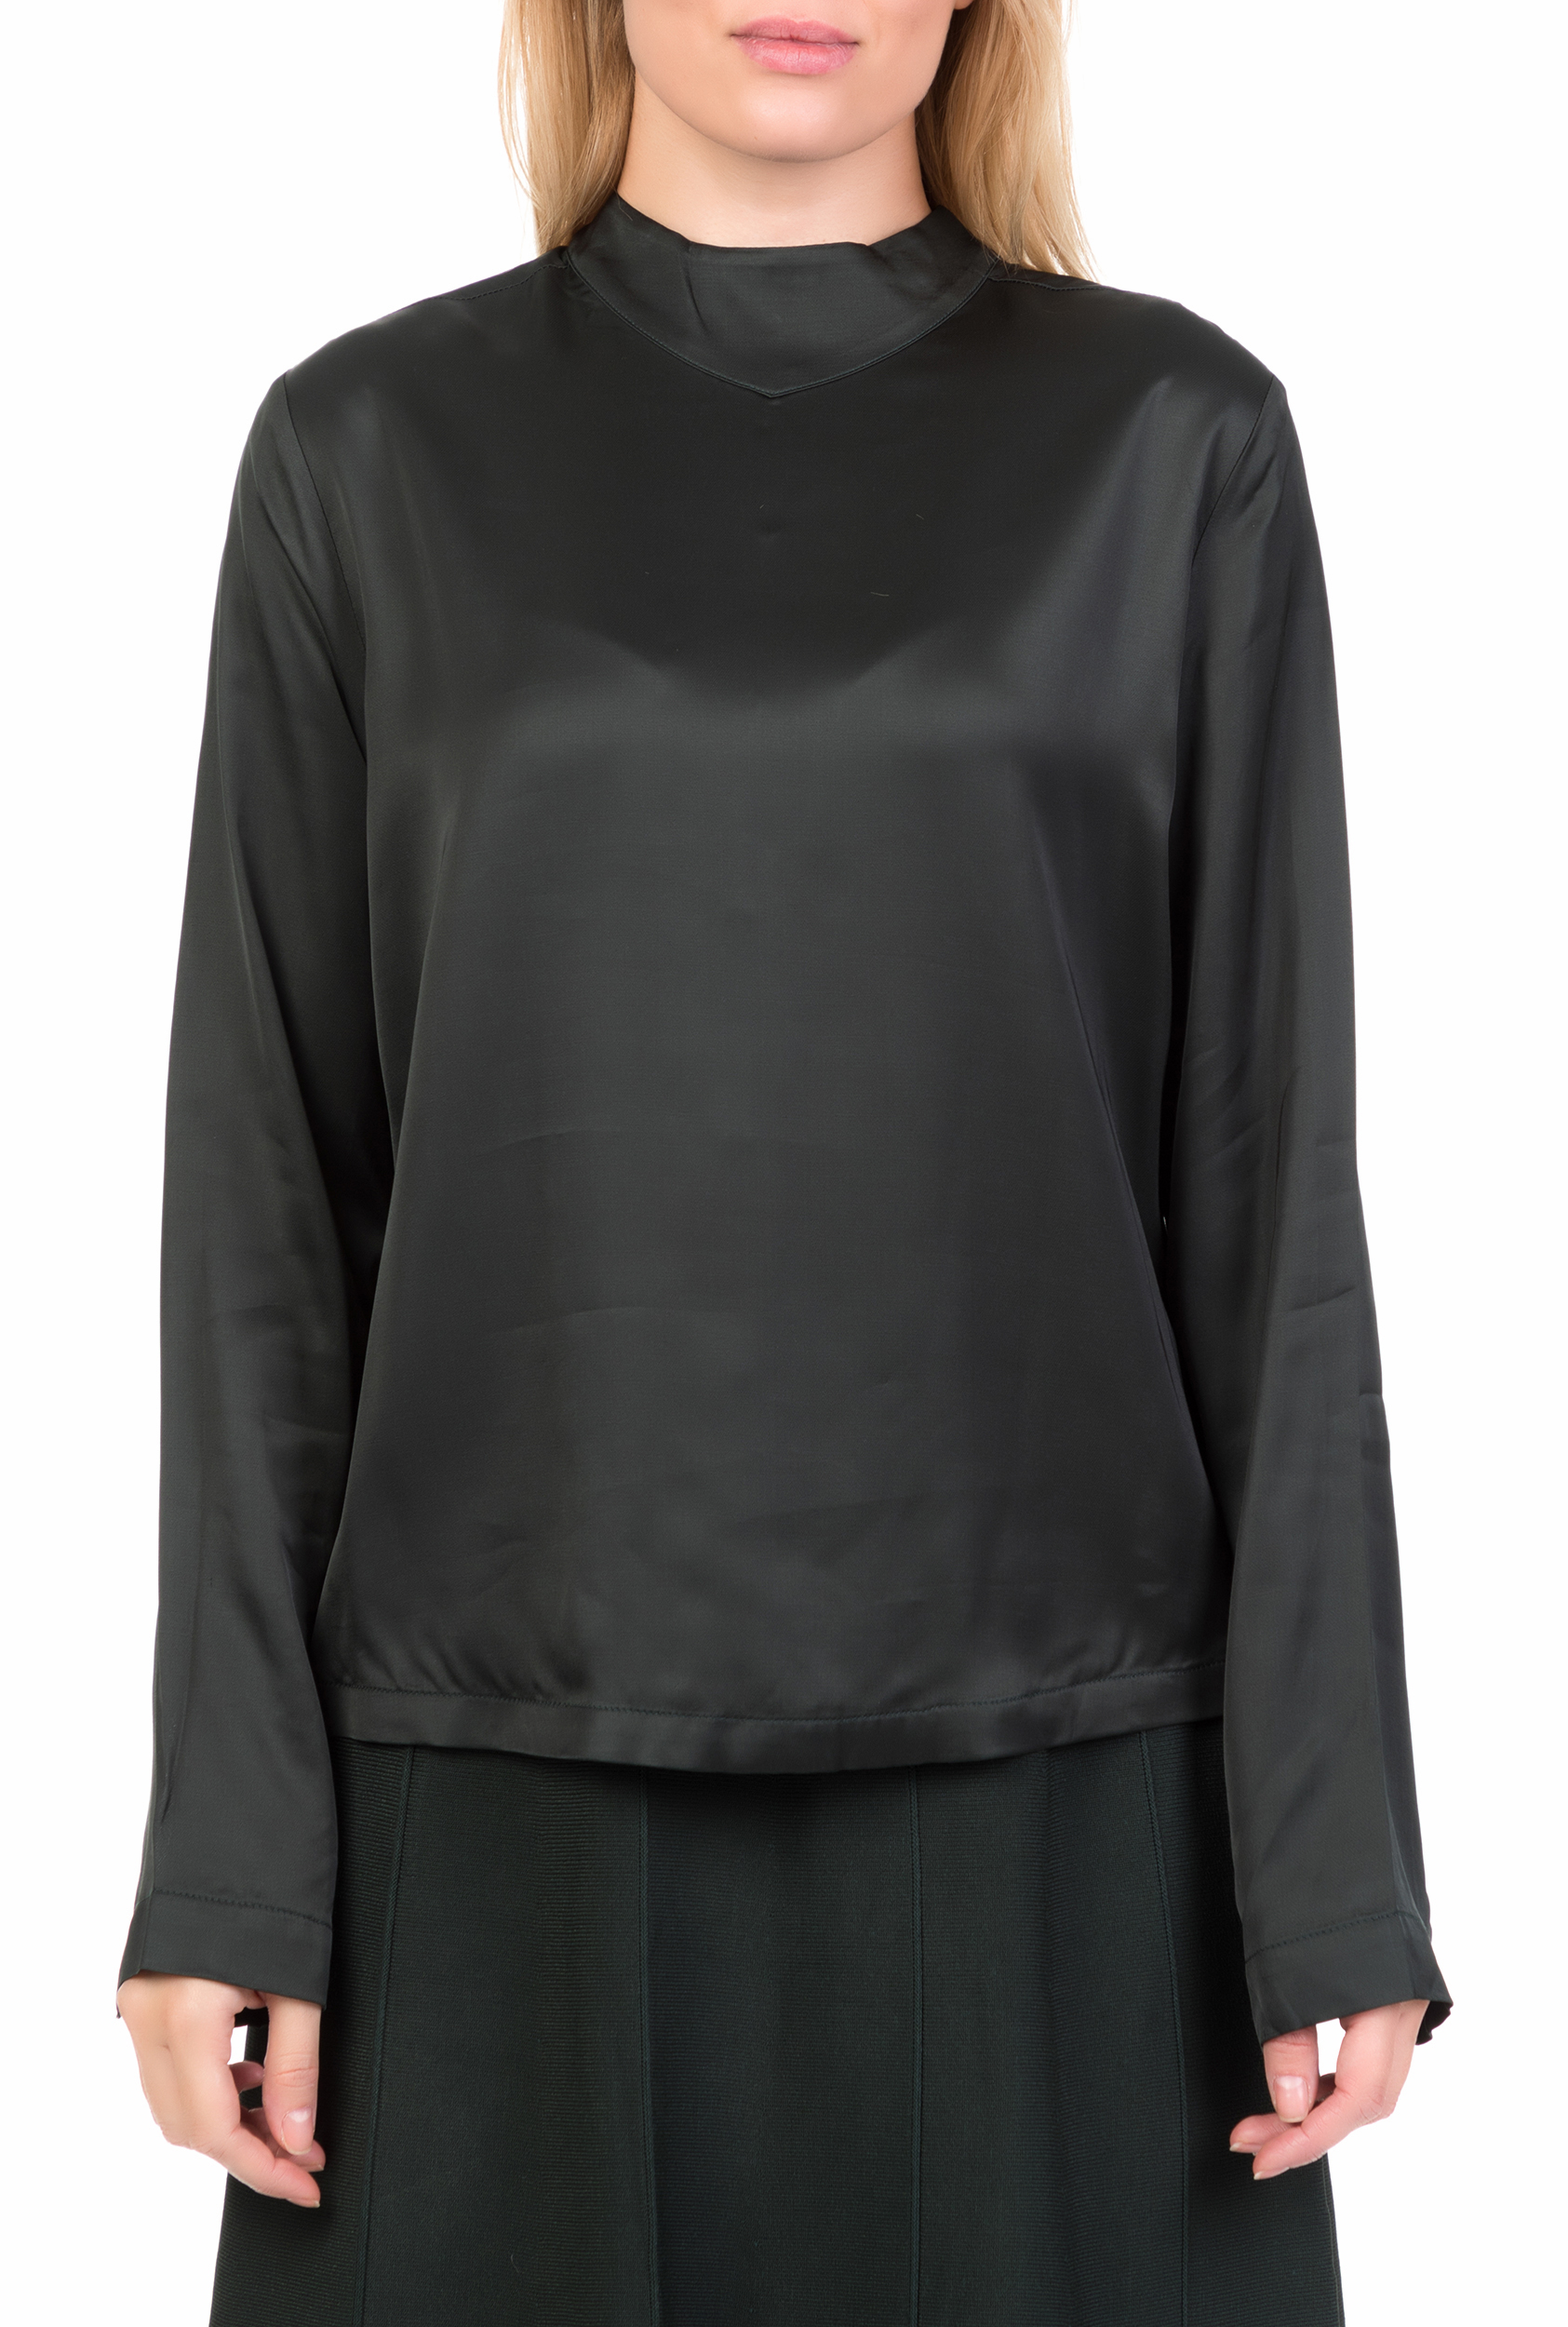 SCOTCH & SODA - Γυναικεία μακρυμάνικη μπλούζα με κουμπιά SCOTCH & SODA μαύρη Γυναικεία/Ρούχα/Μπλούζες/Τοπ